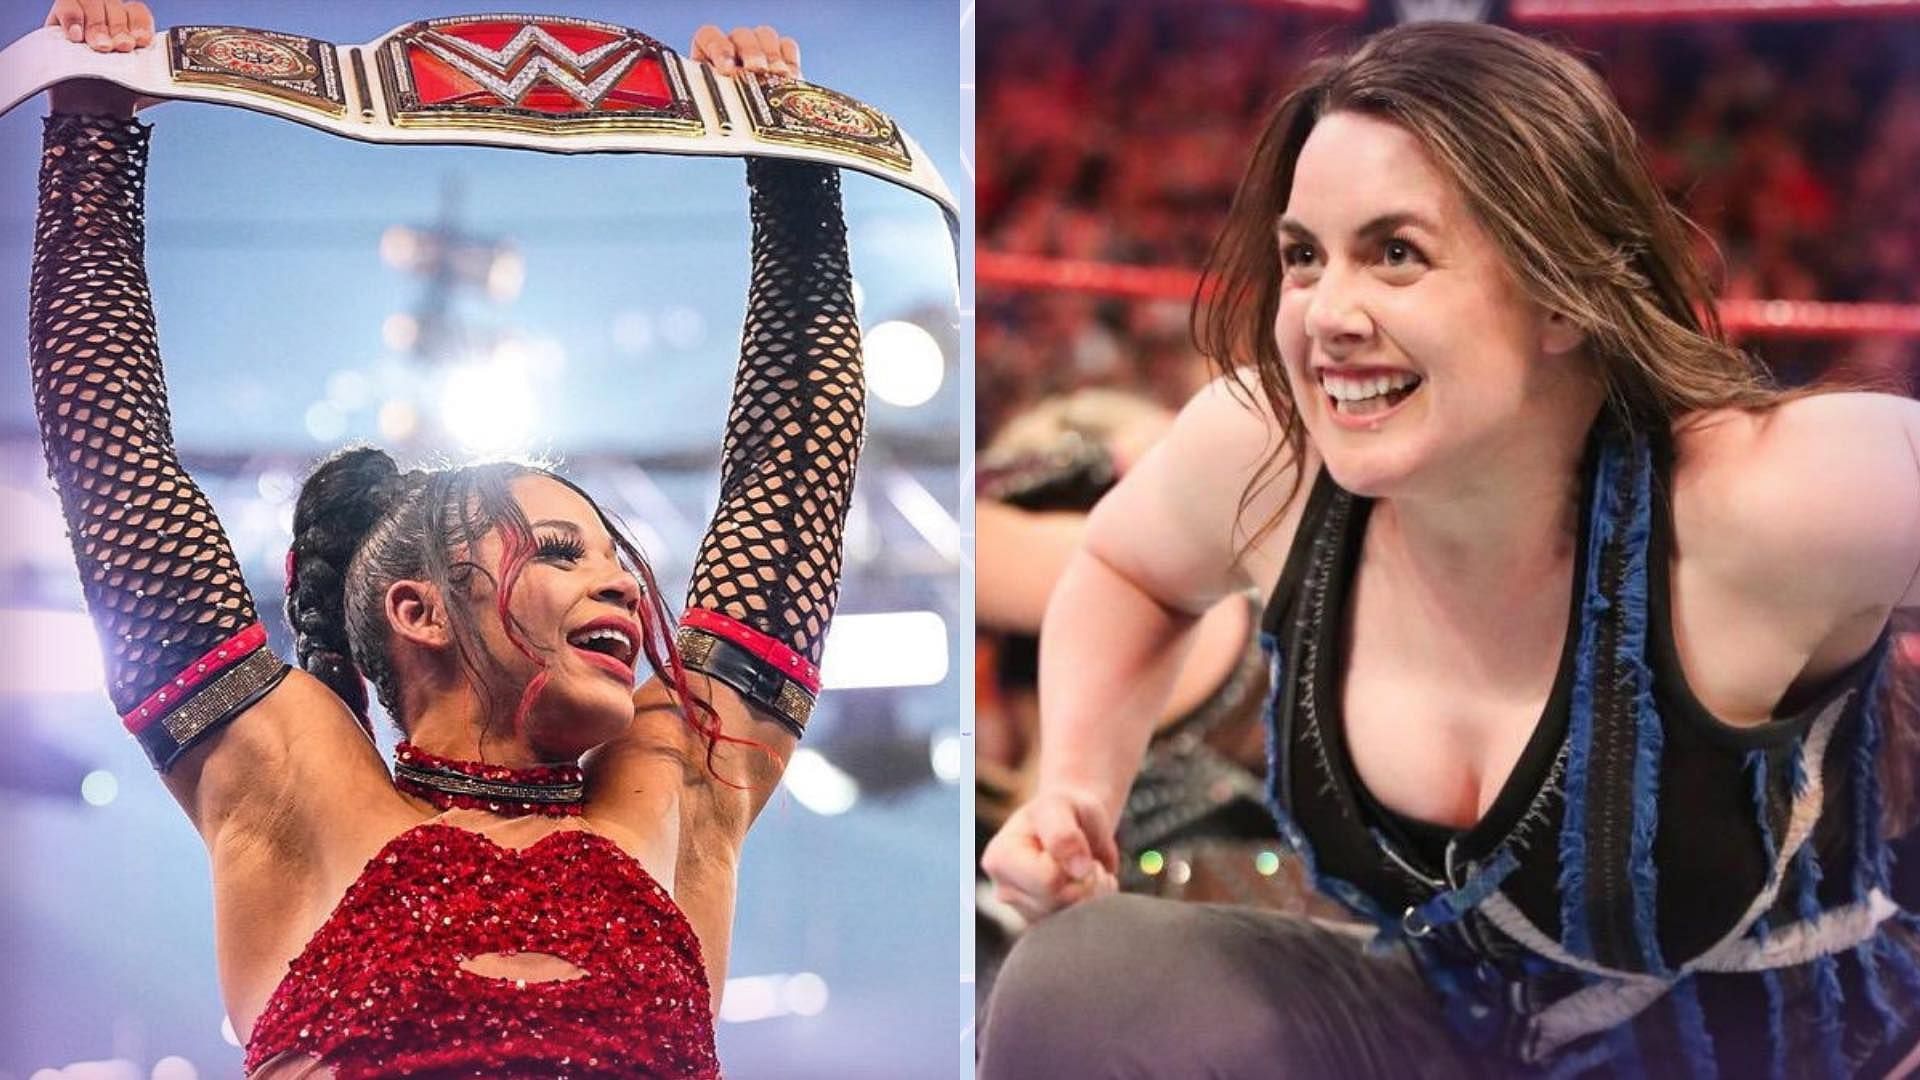 Nikki Cross could still make an impact on WWE programming